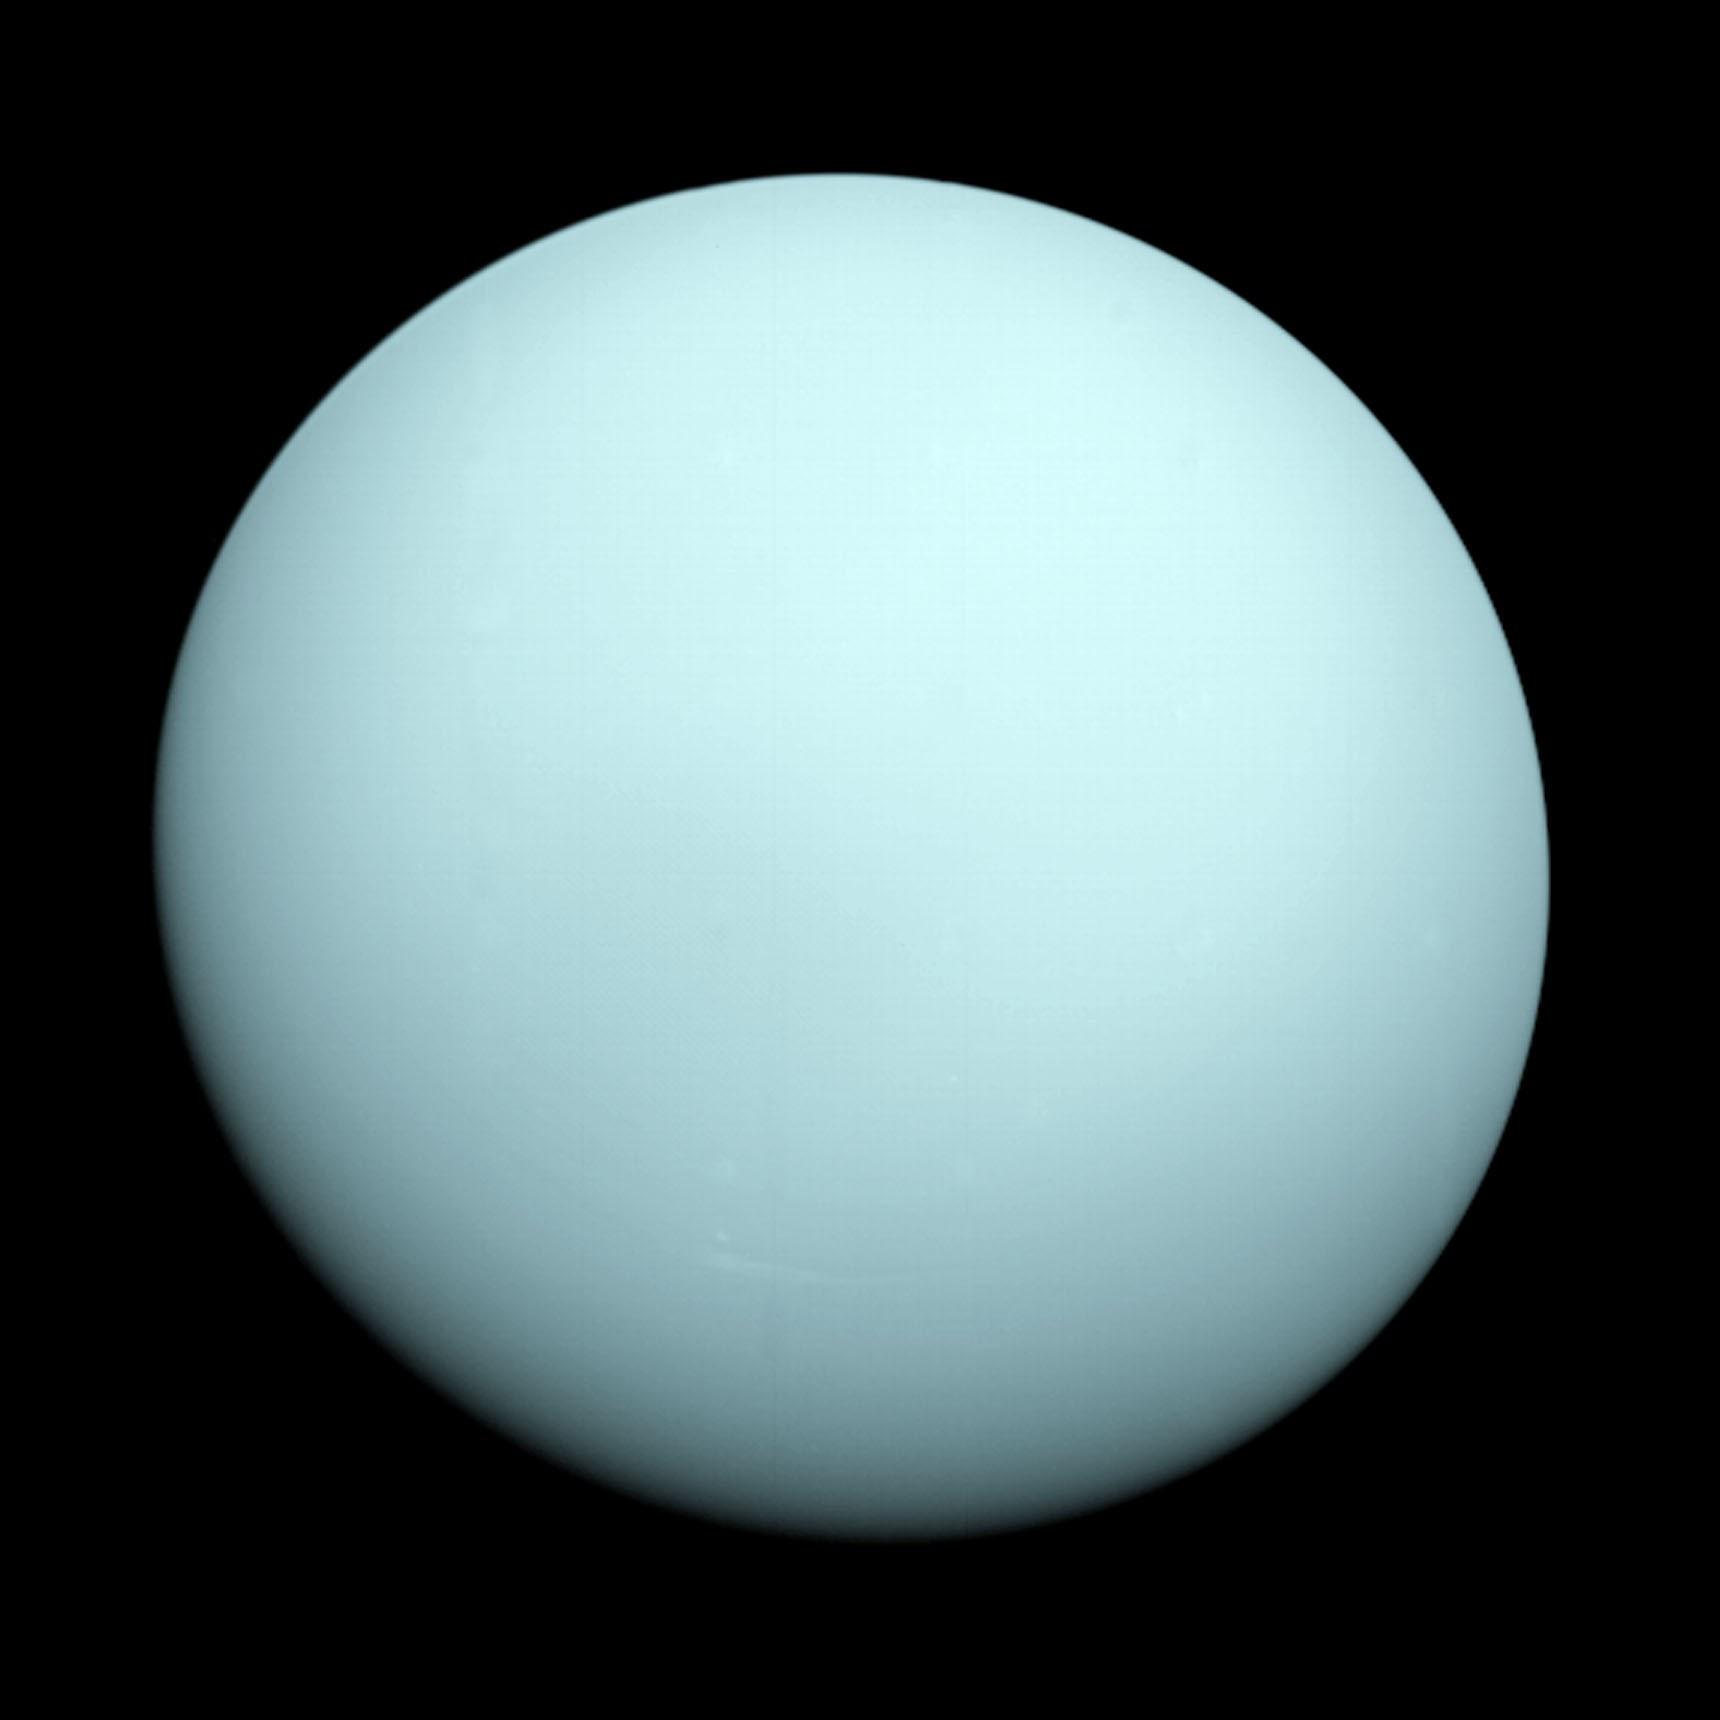 Uranus blasted a gas bubble 22,000 times bigger than Earth